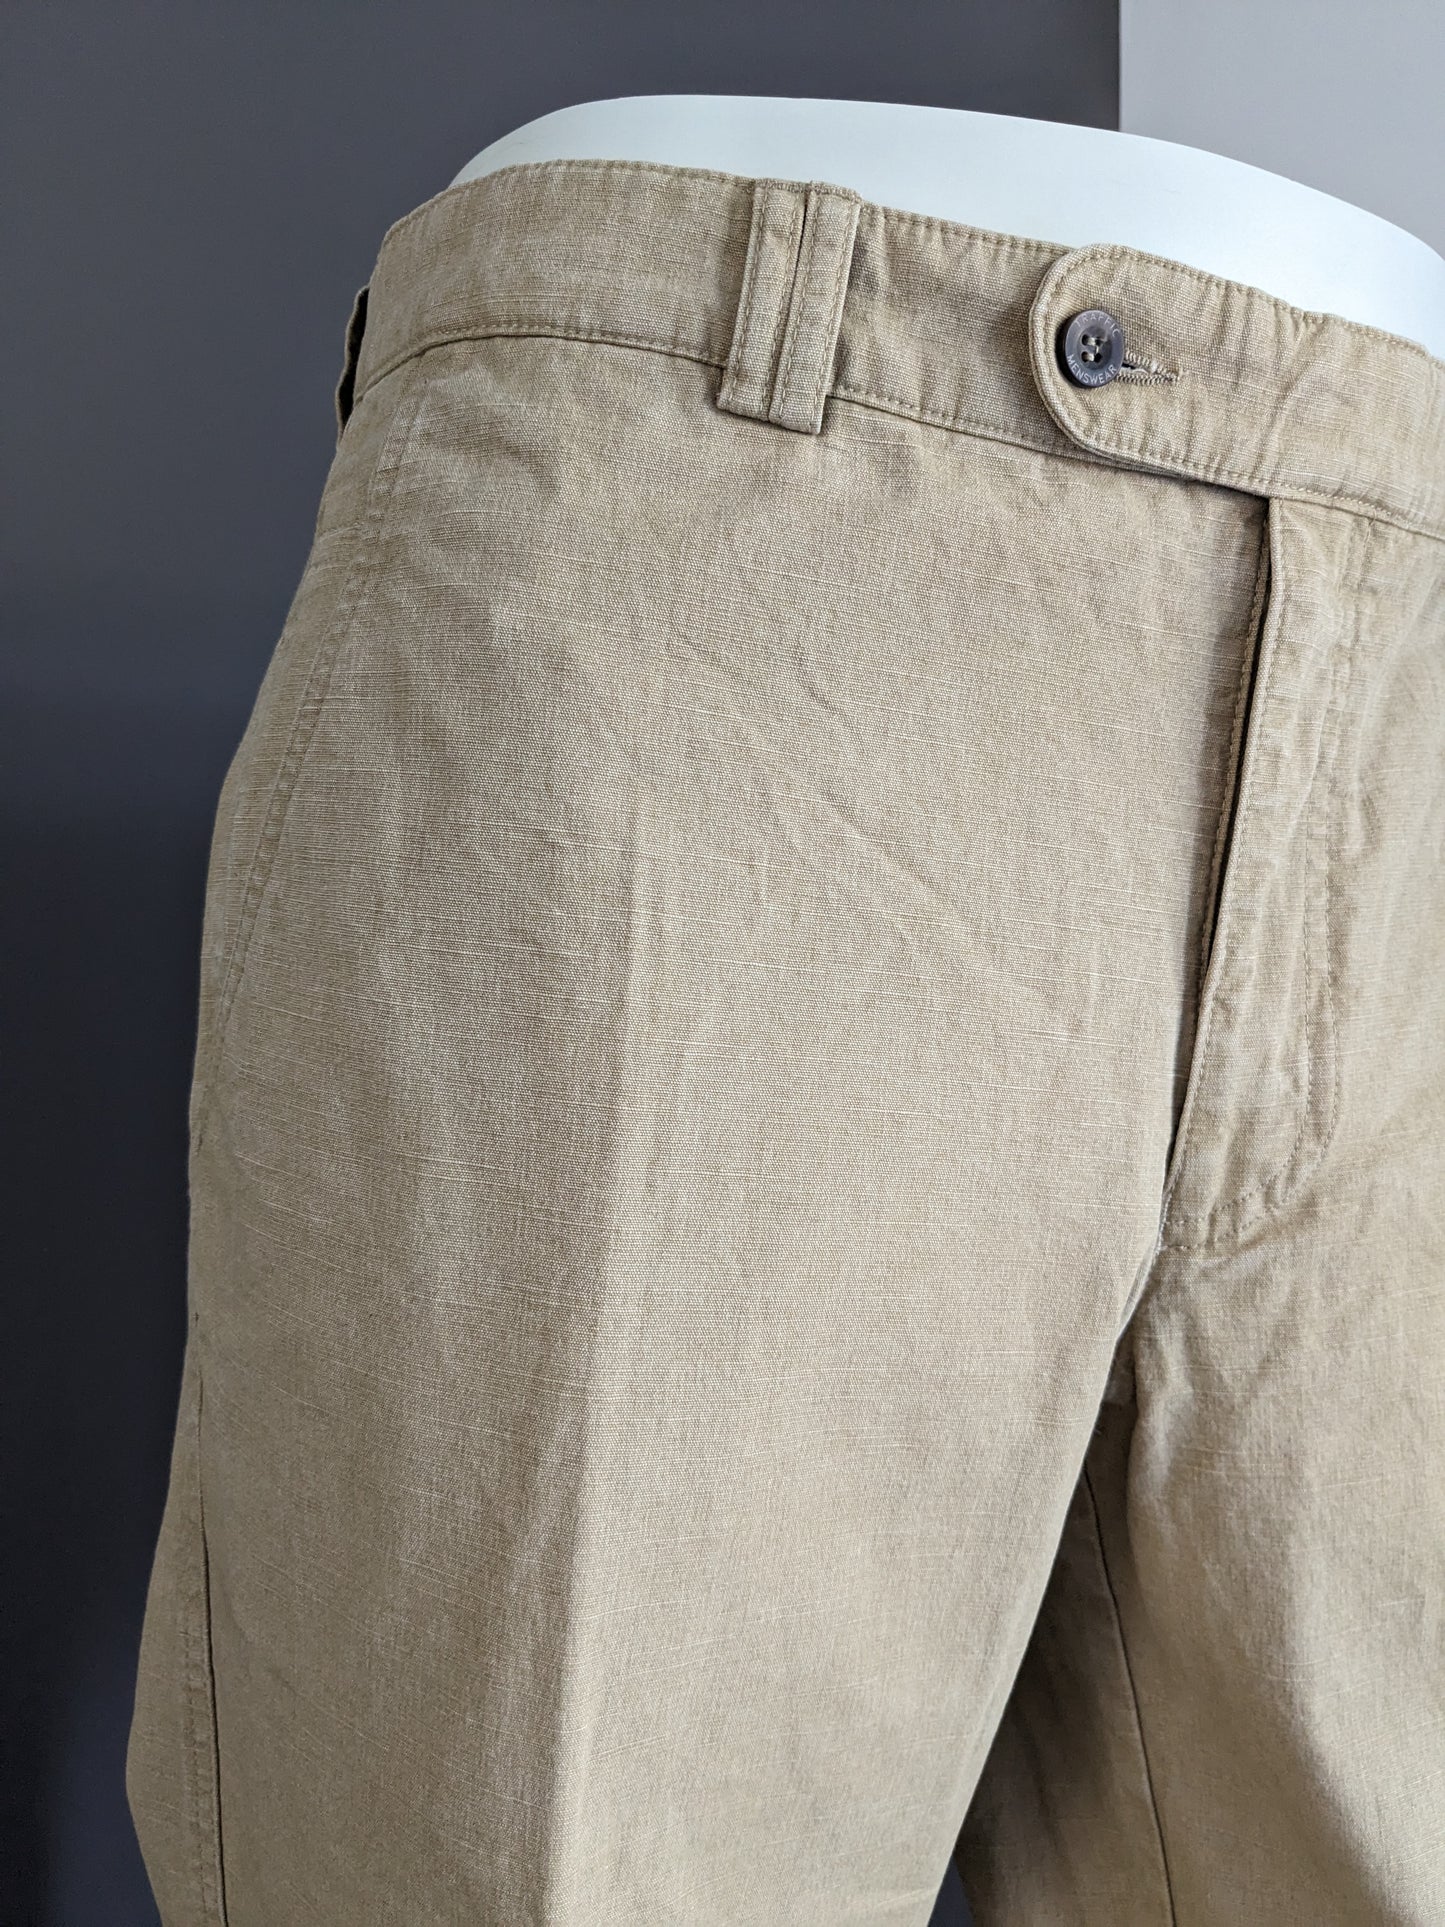 Pantalones / pantalones de moda masculina Traffic. Motivo beige. Talla 51 / M-L.